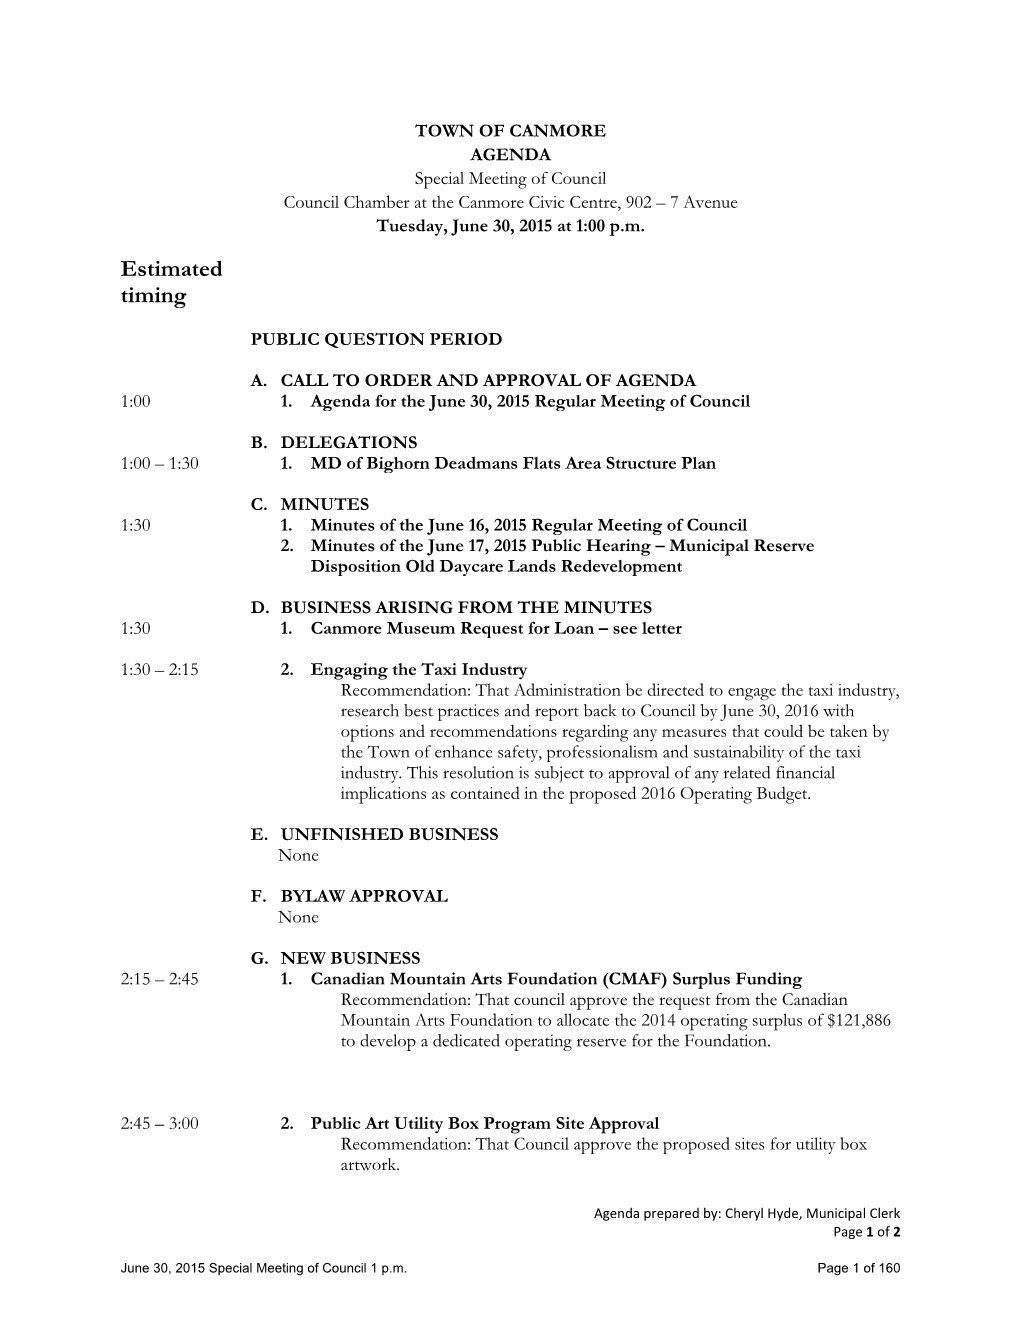 Council Agenda 2015-06-30